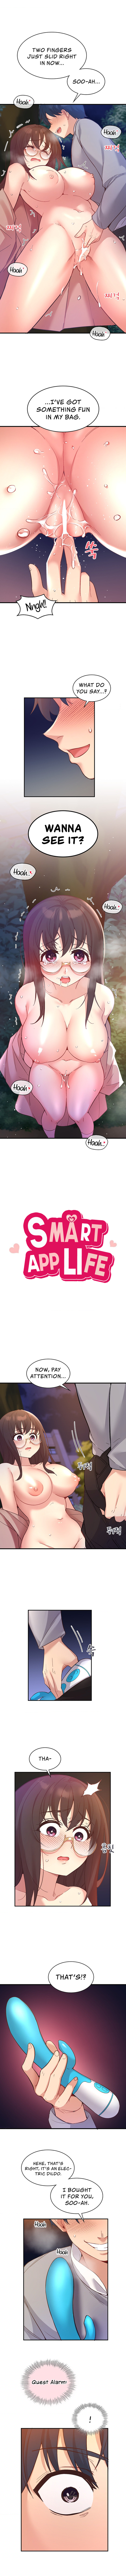 Smart App Life NEW image